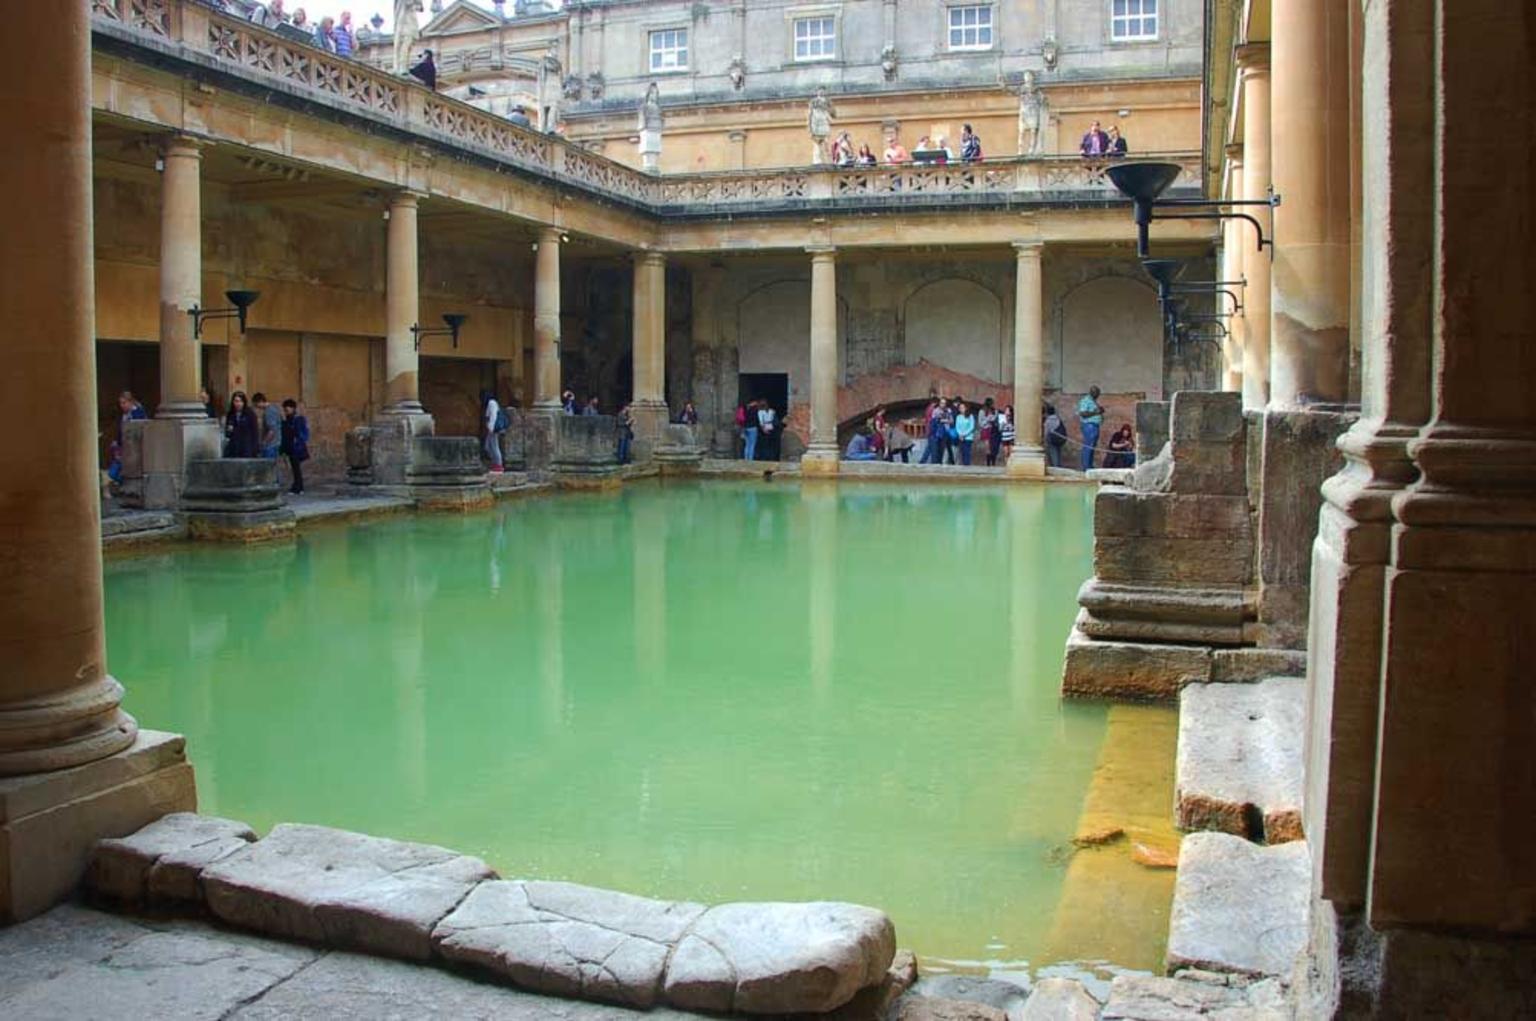 Outdoor pool in Bath's Roman Bath complex